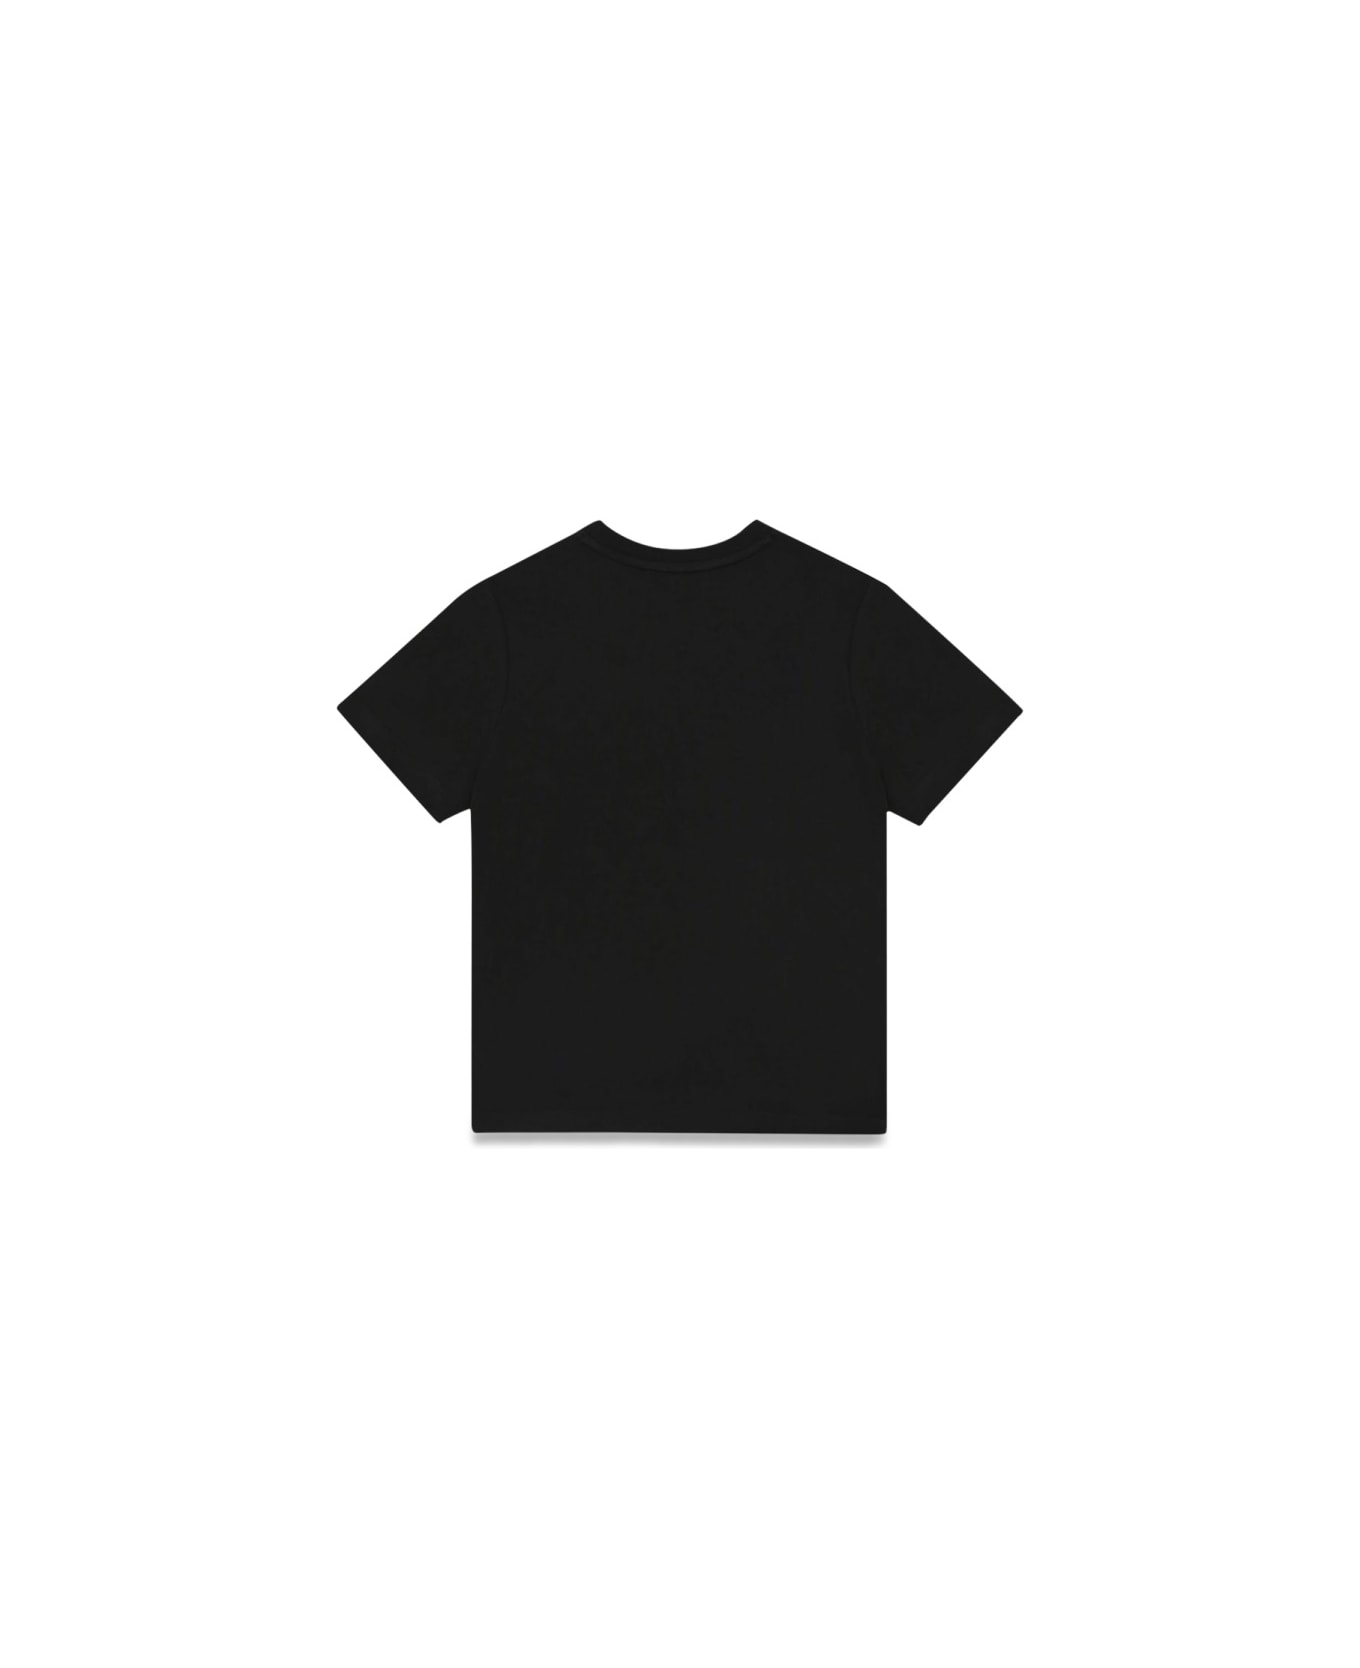 DKNY Tee Shirt - BLACK